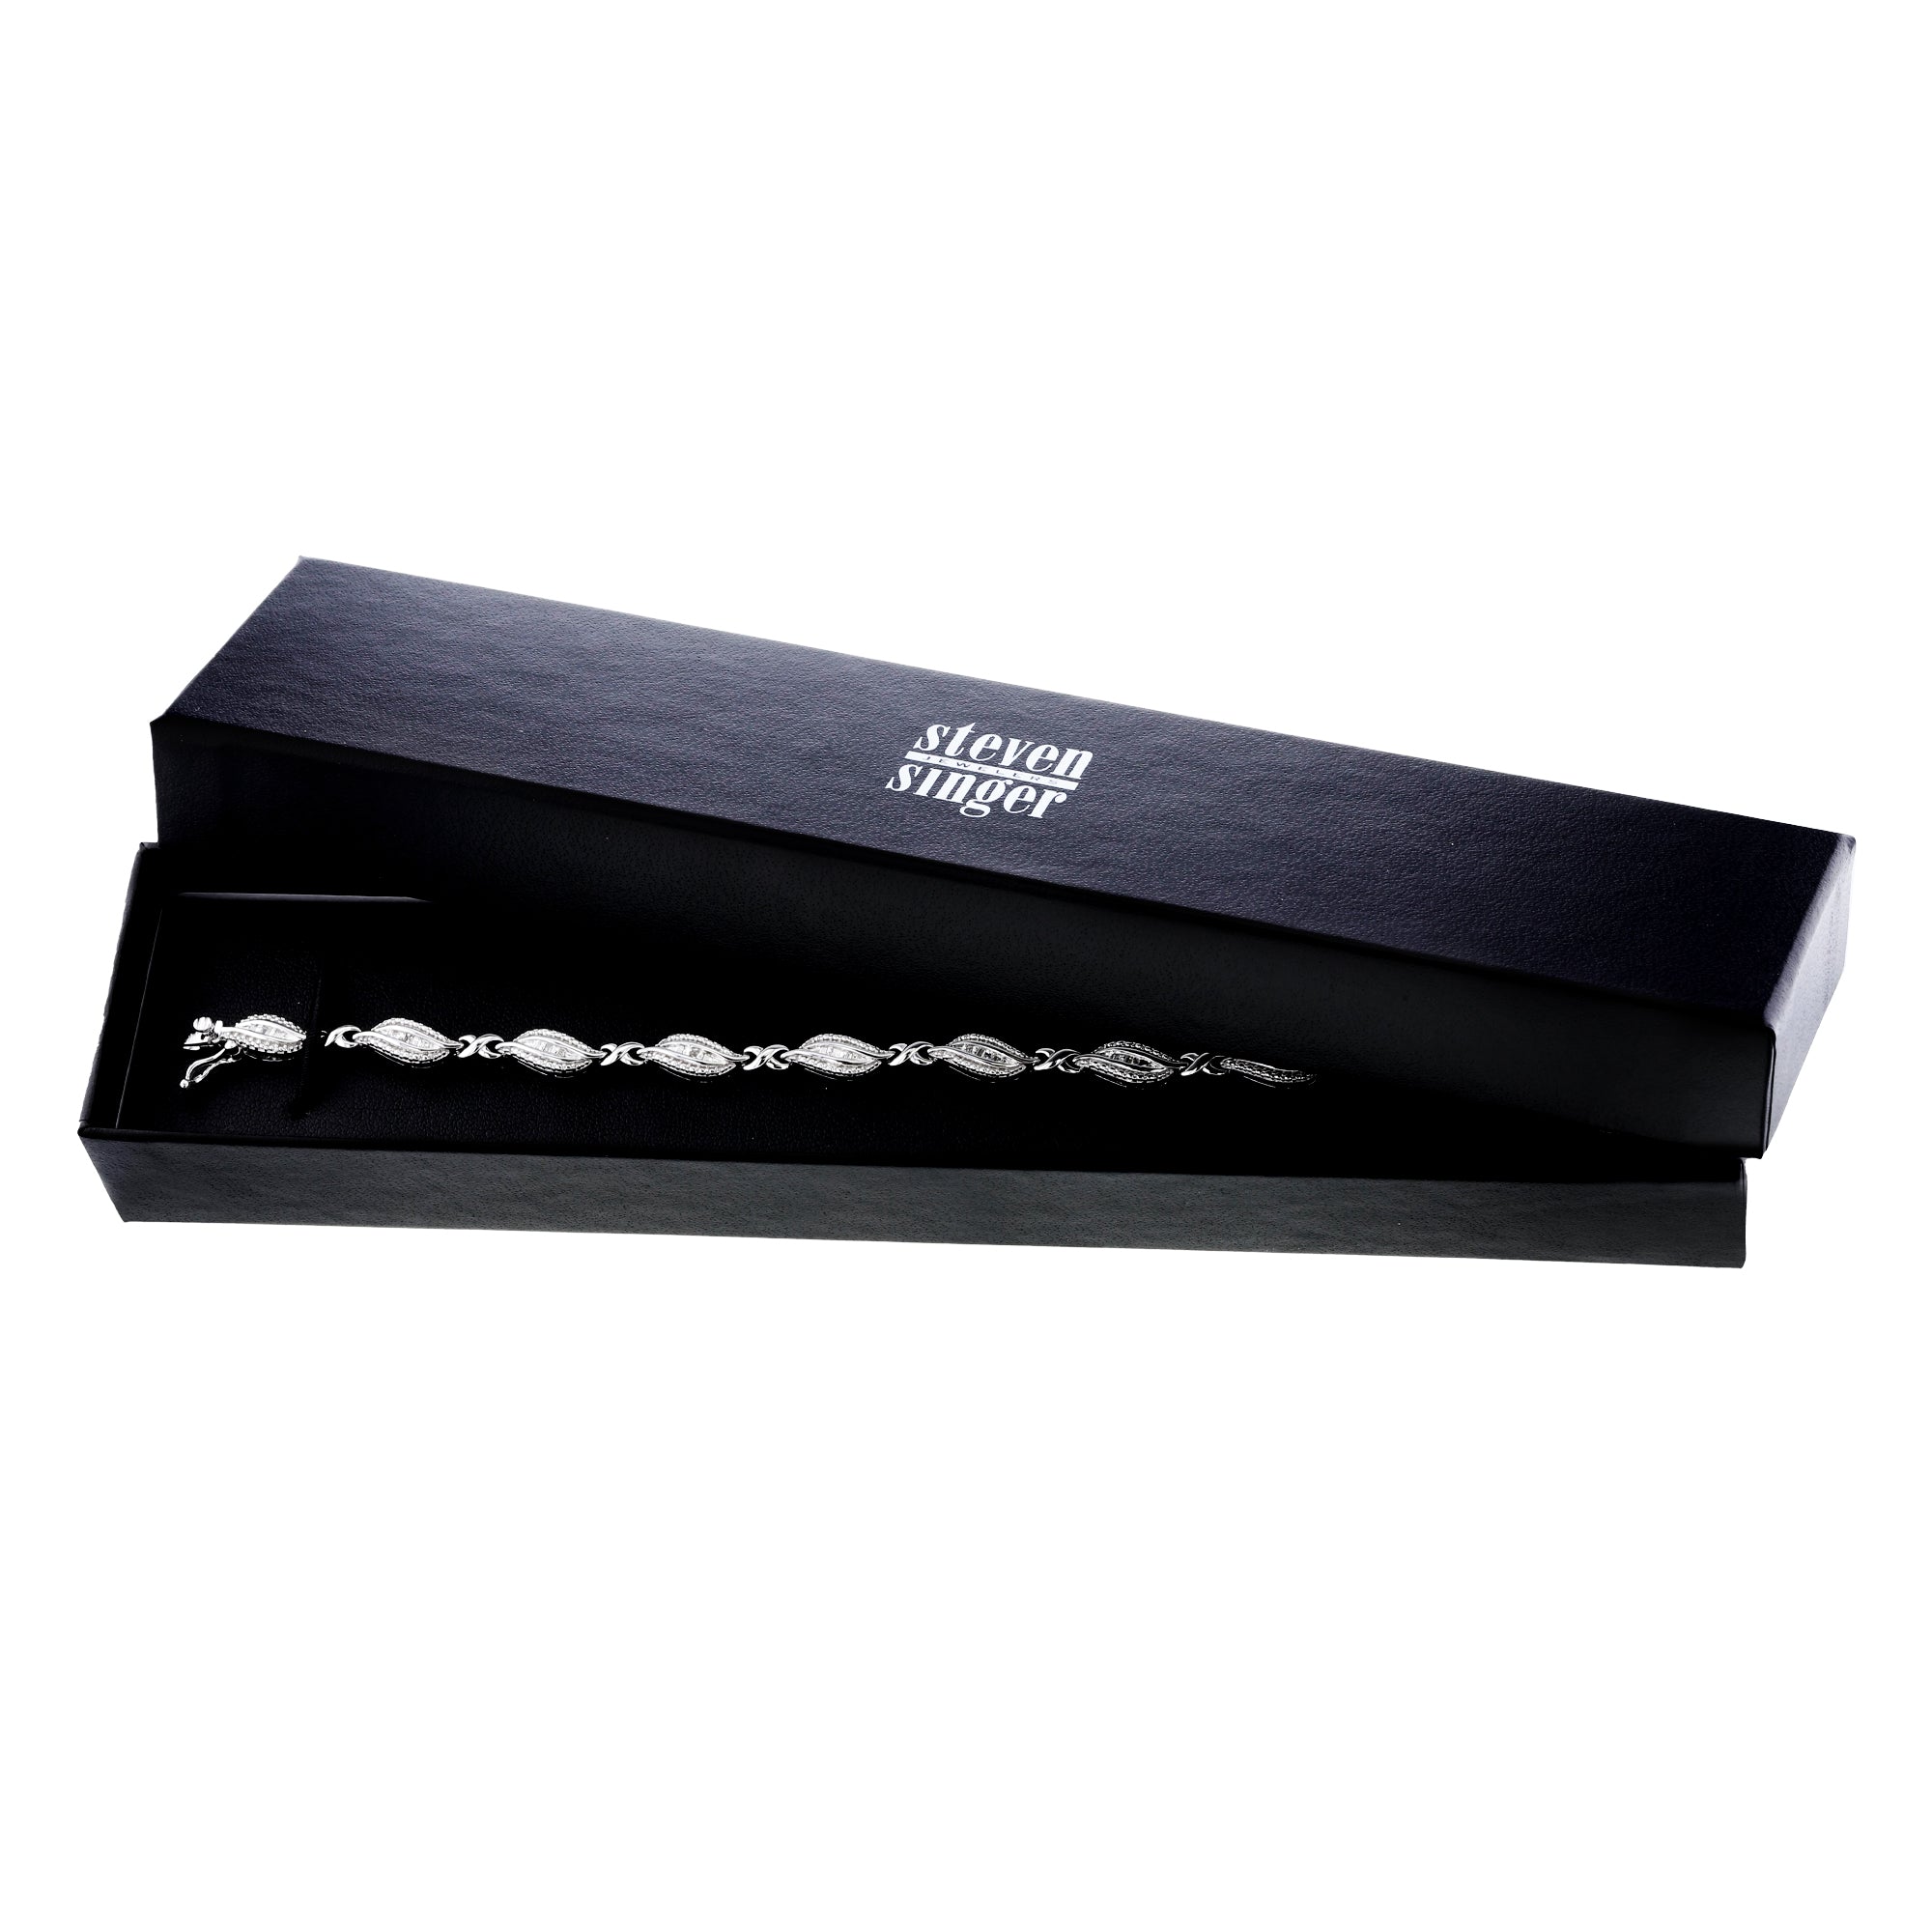 At Last Diamond Bracelet from Steven Singer Jewelers in a gift box